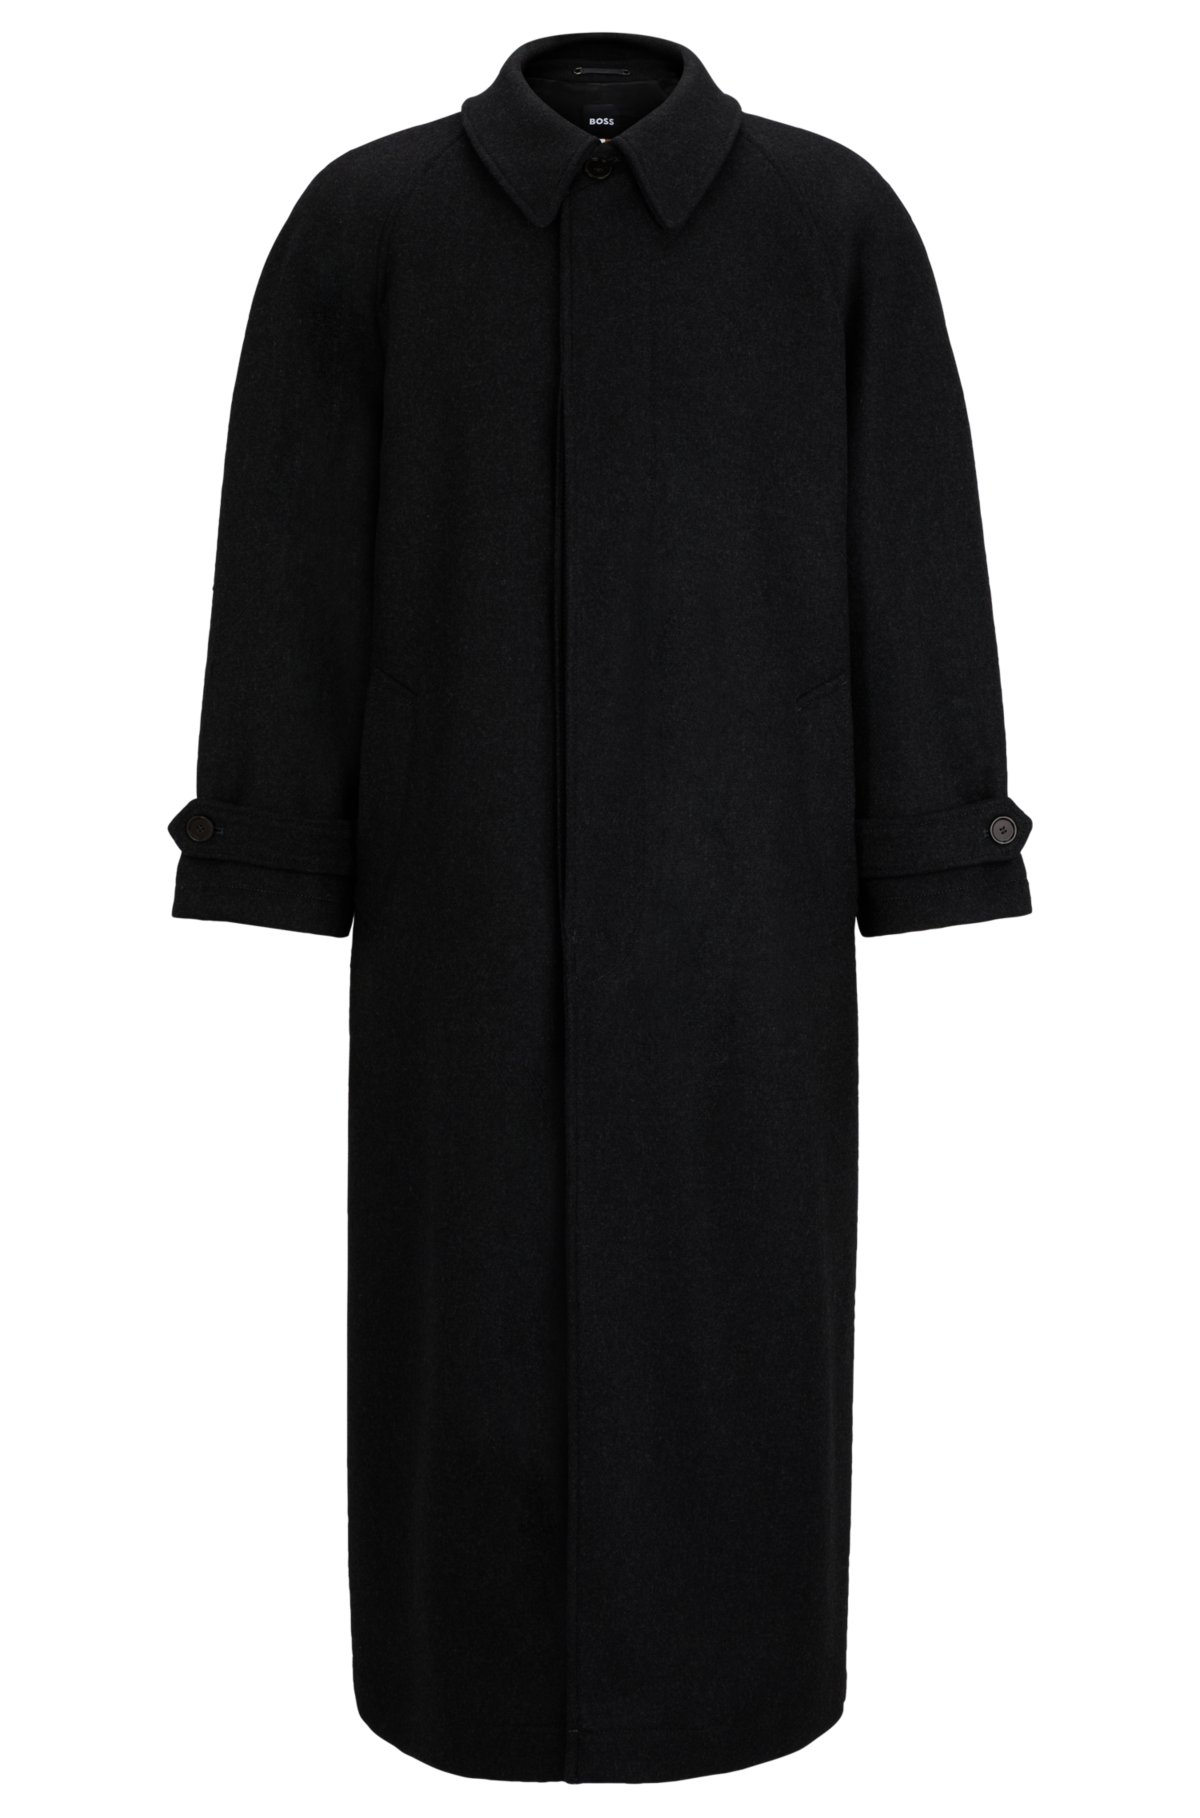 Louis Vuitton Mixed Monogram Masculine Shirt, Black, 40